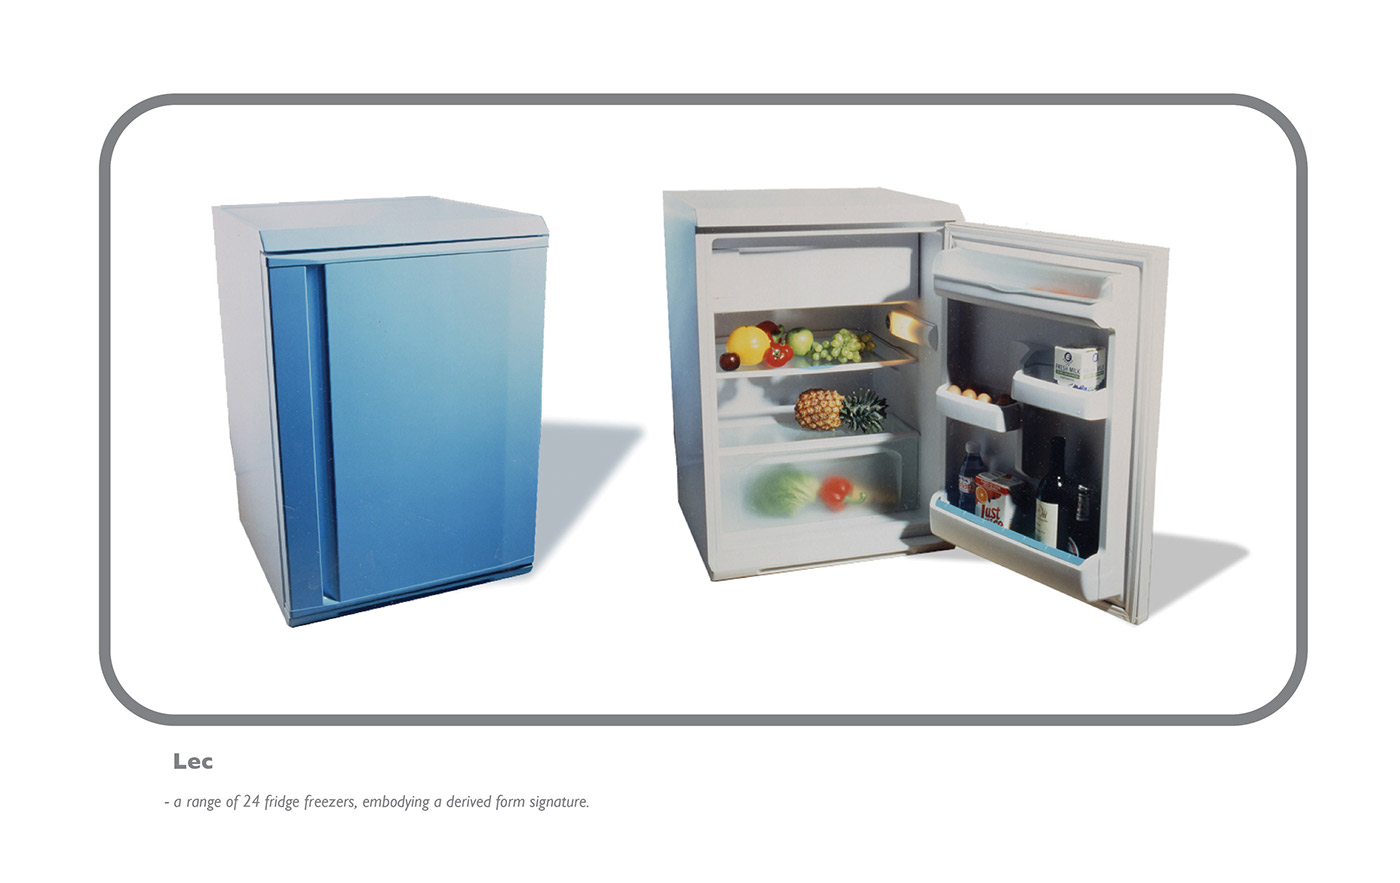 industrial design  kitchen fridges appliances White Goods product design  Lec kitchen appliances design home